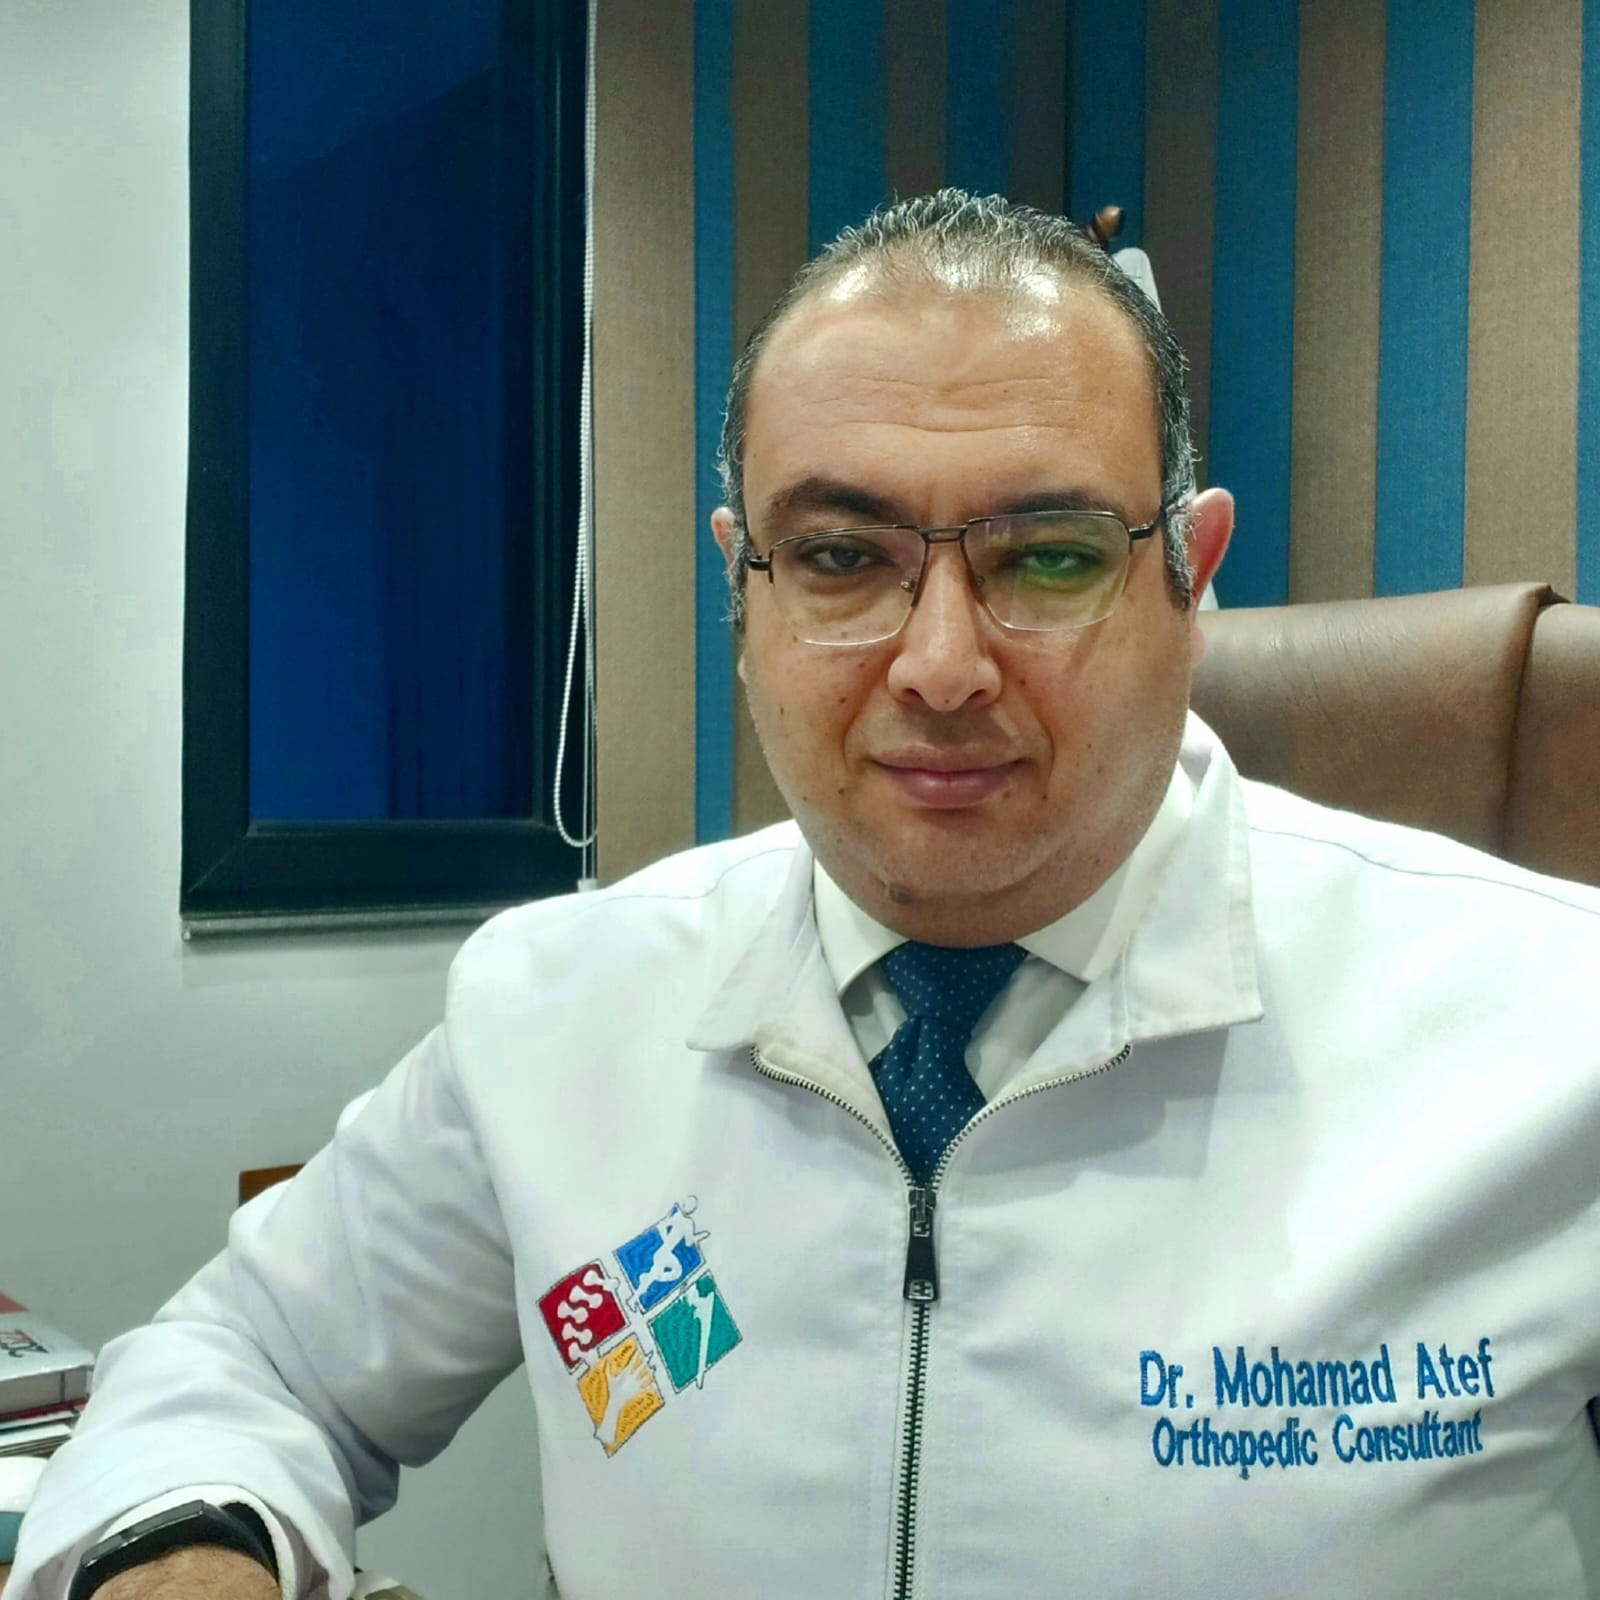 Dr. Mohamed Atef